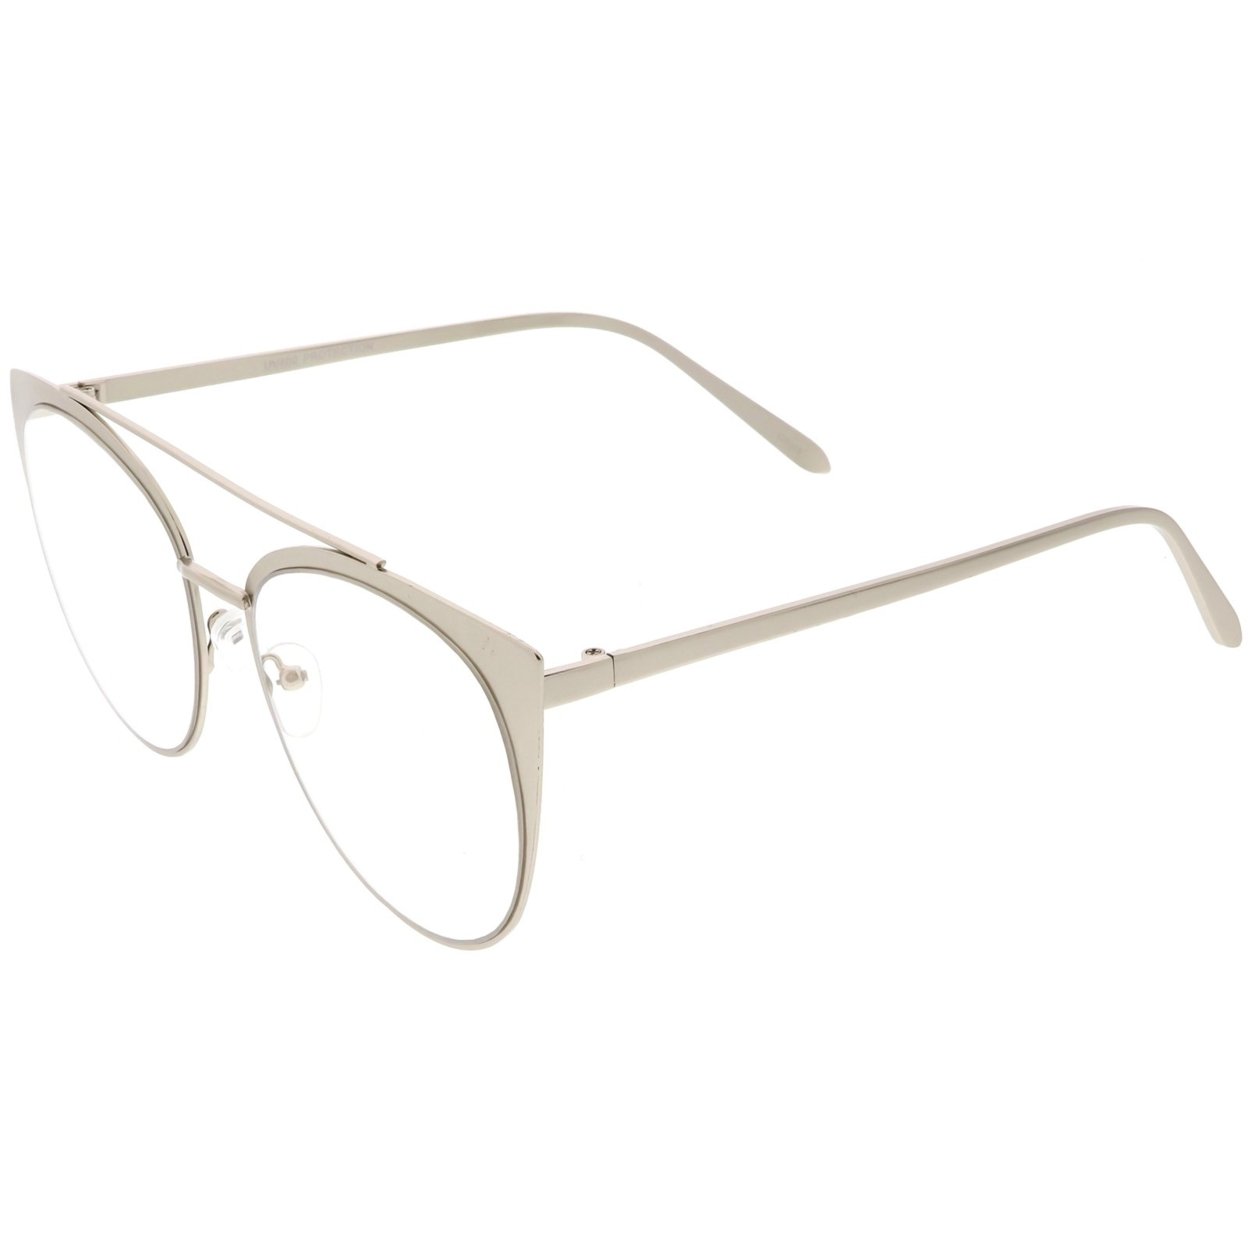 Women's Oversize Metal Cat Eye Glasses Crossbar Round Clear Flat Lens 61mm - Silver / Clear